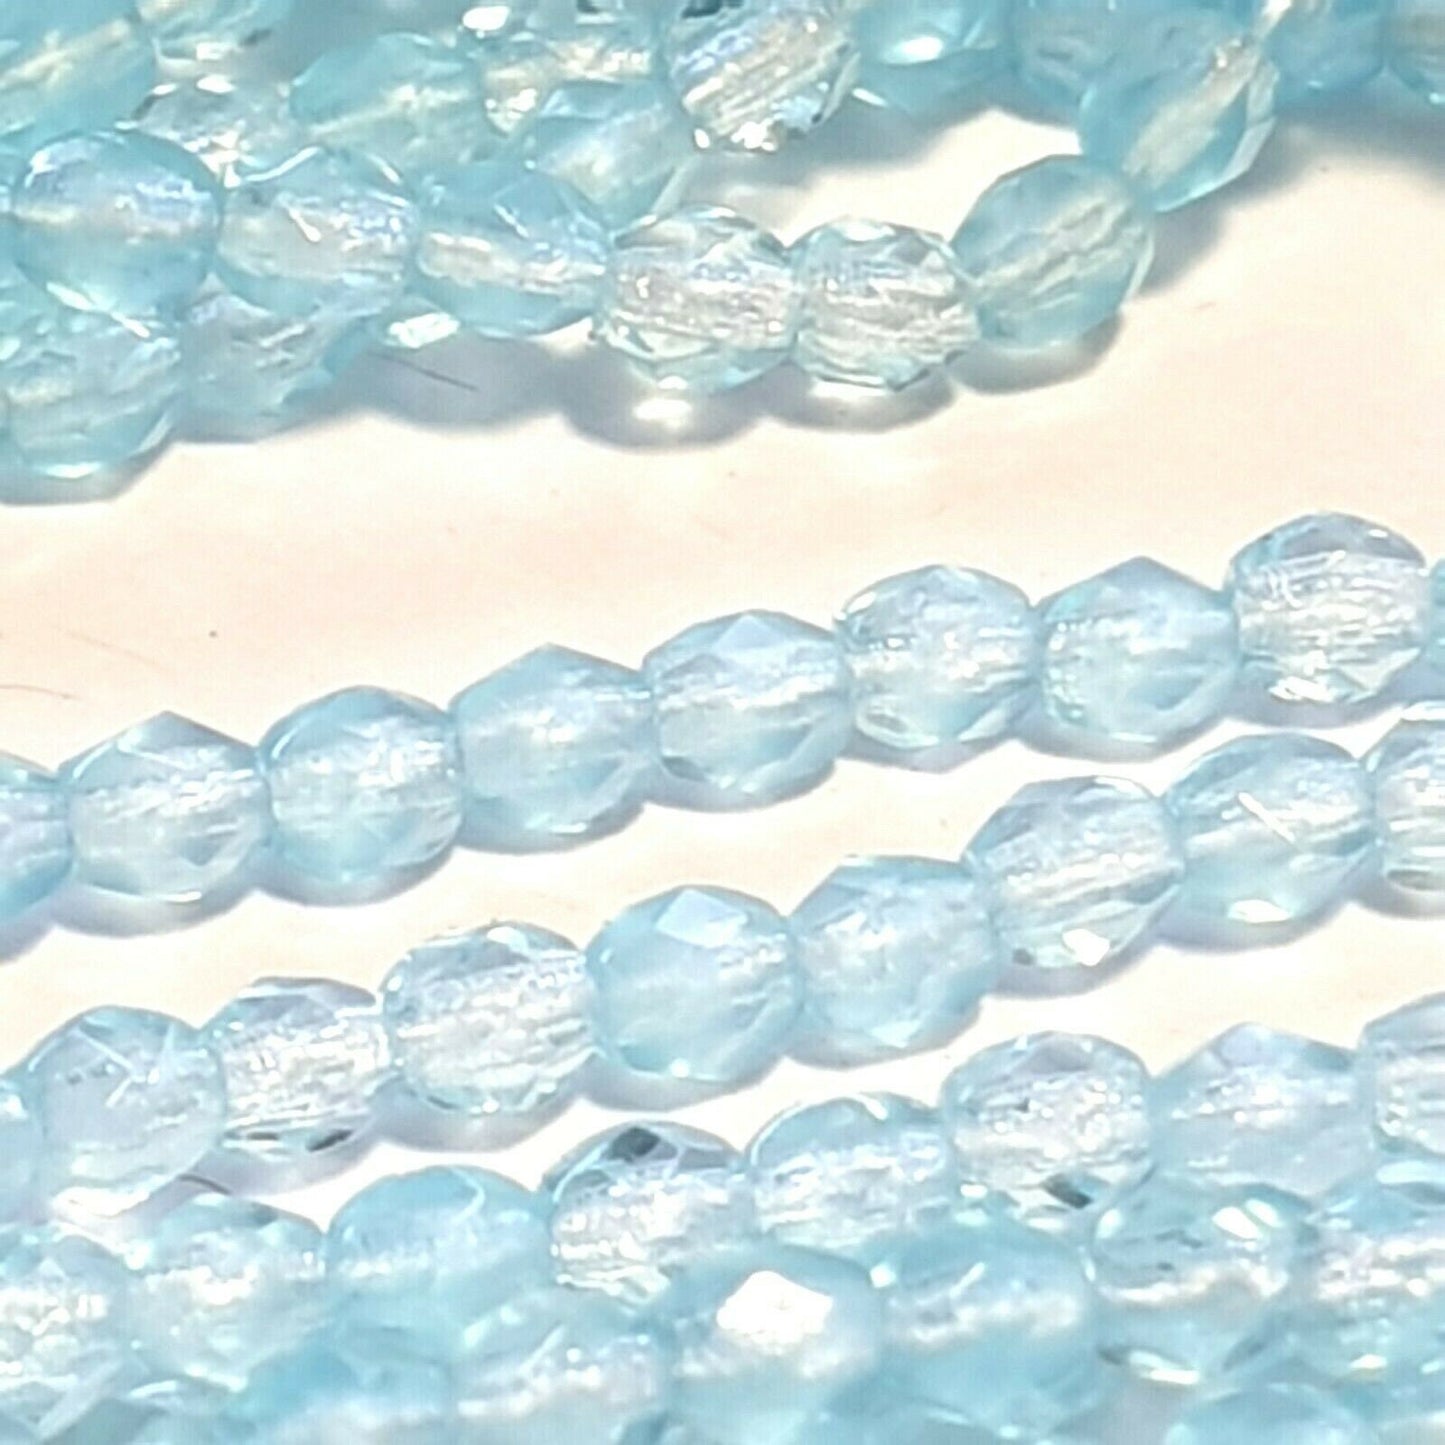 Czech glass beads - 3mm Round x 50, Glacier Blue, transparent, fire polished